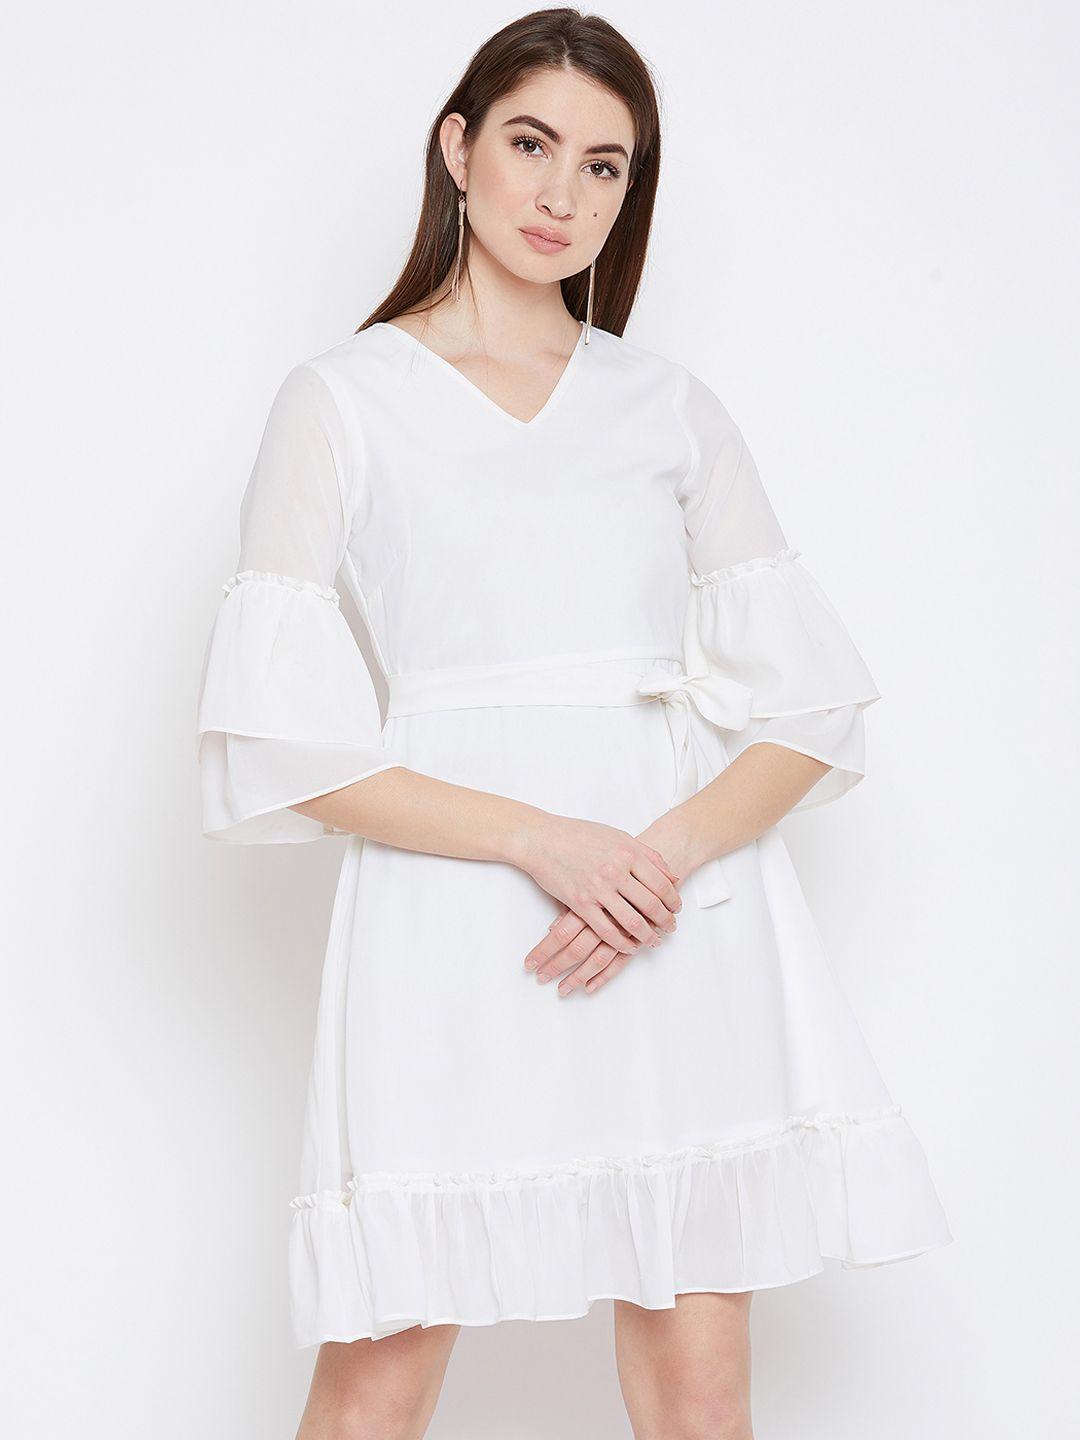 imfashini-women-white-fit-and-flare-dress